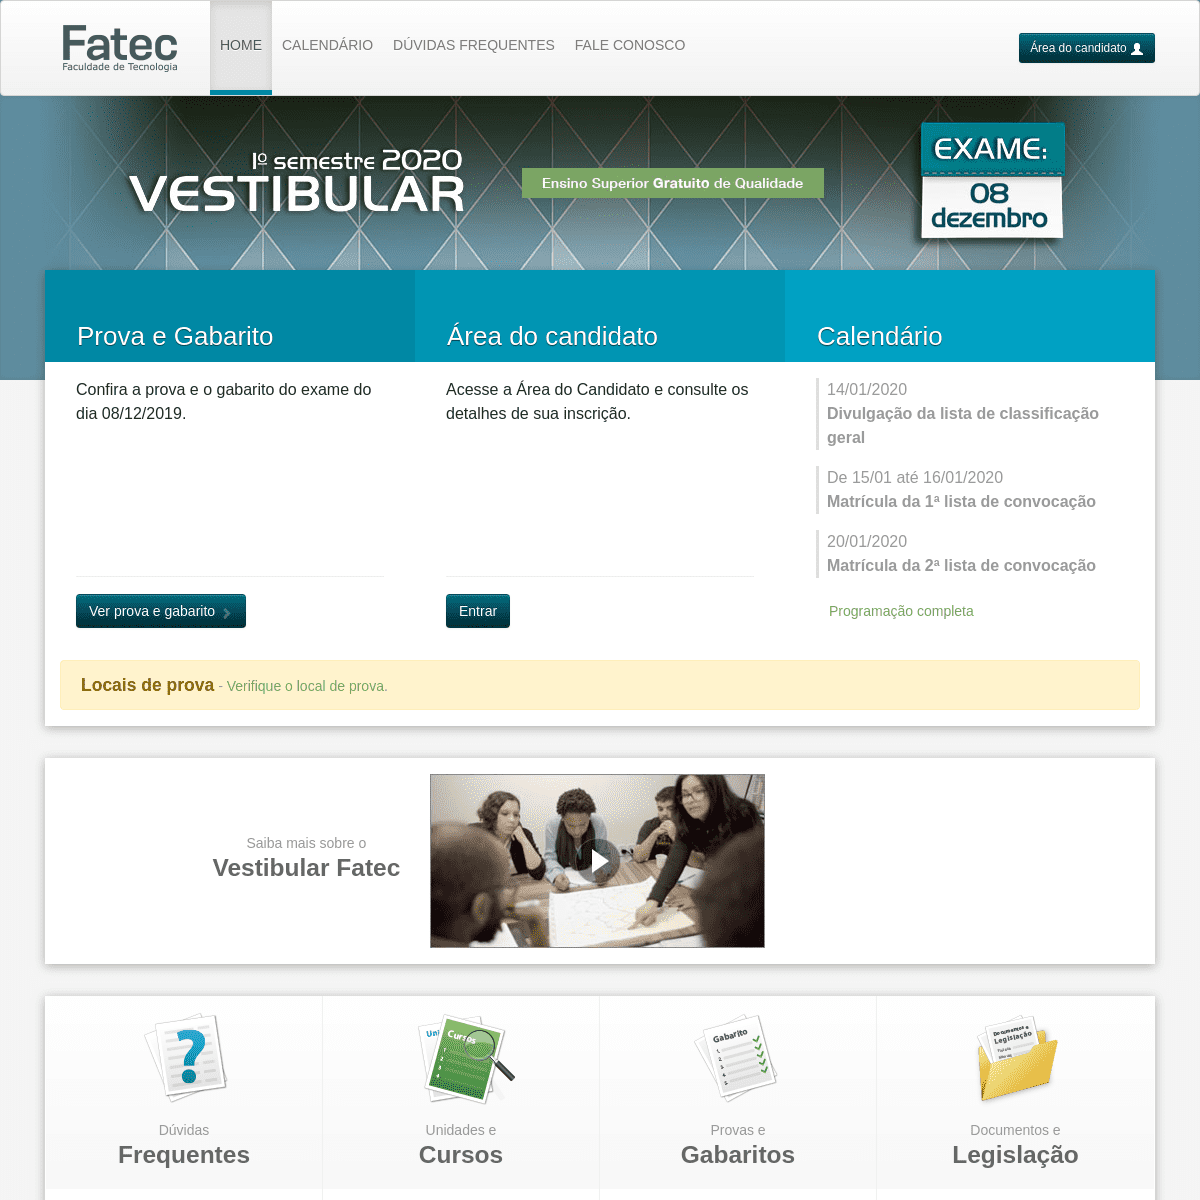 A complete backup of vestibularfatec.com.br